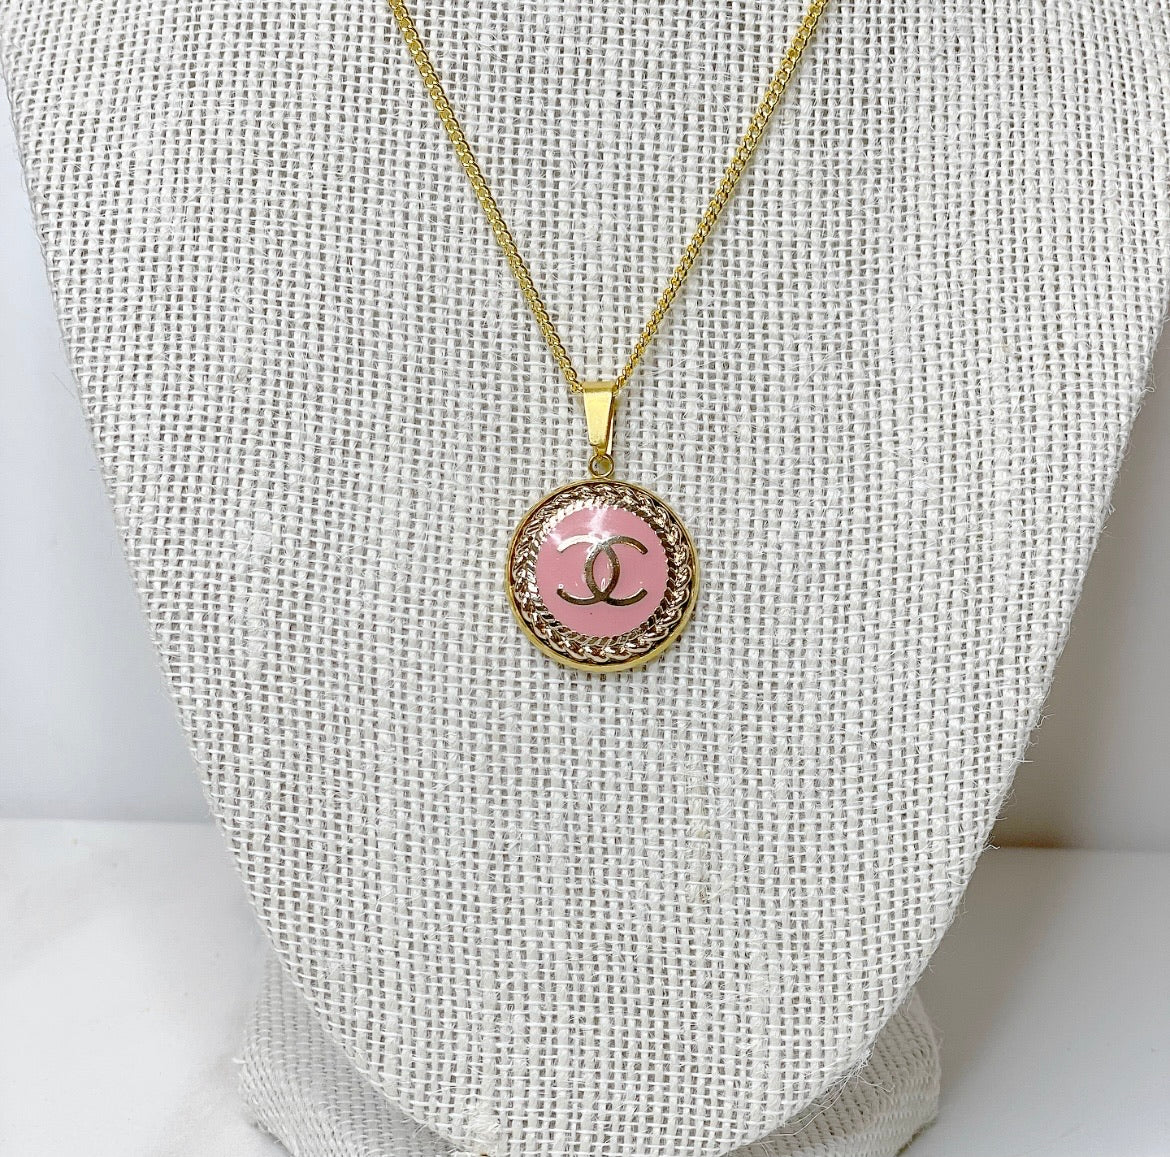 Repurposed Pink CC Heart Pendant Necklace